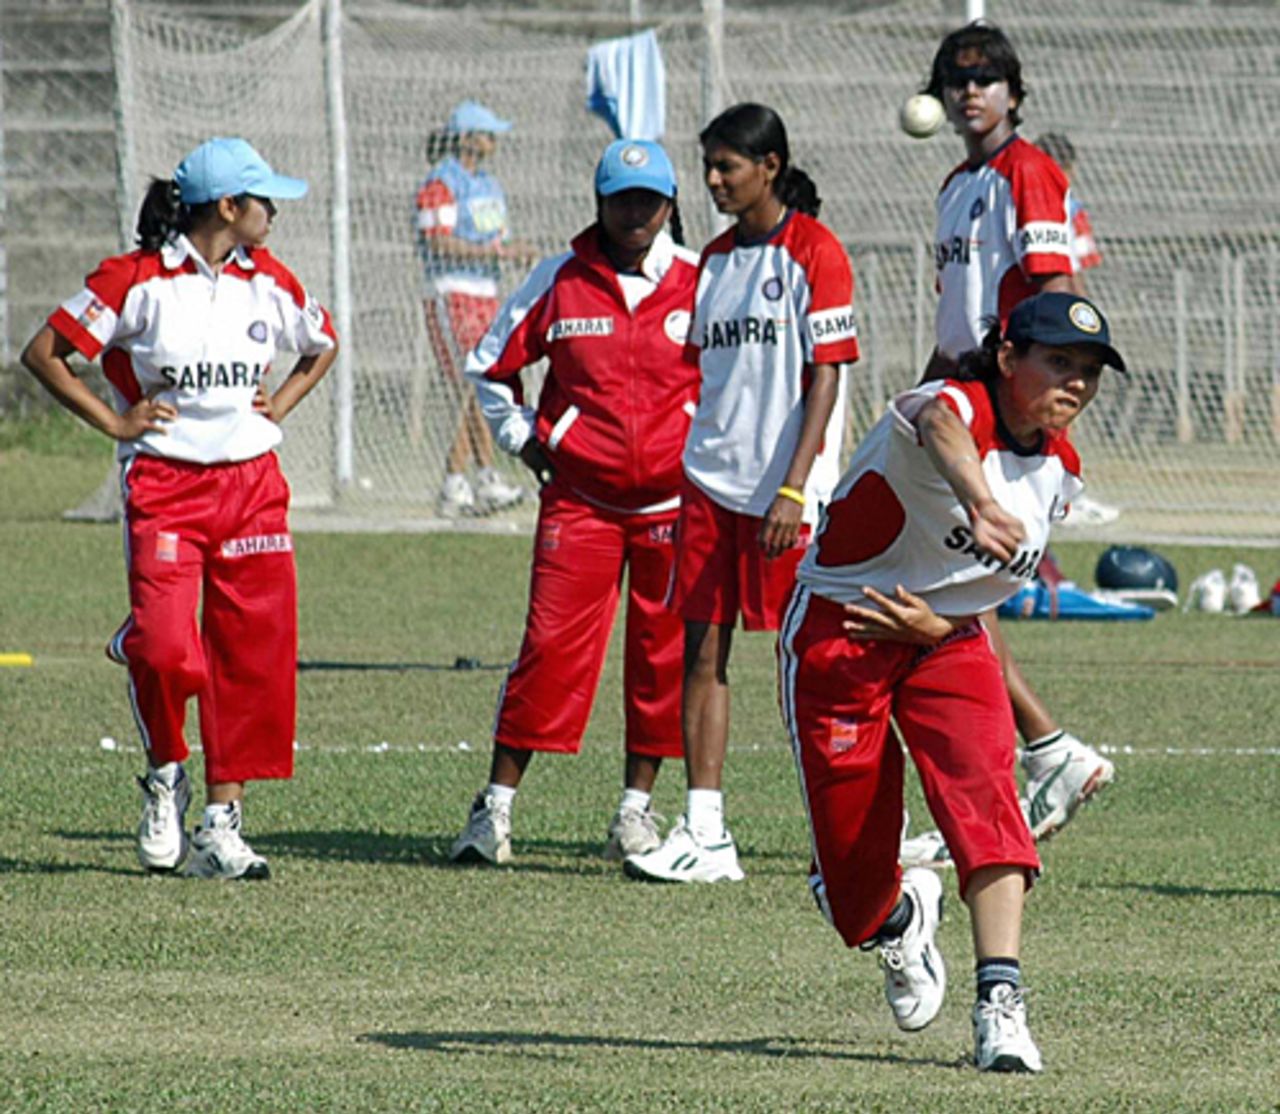 Members of the Indian women's side practise, Guwahati, December 3, 2005